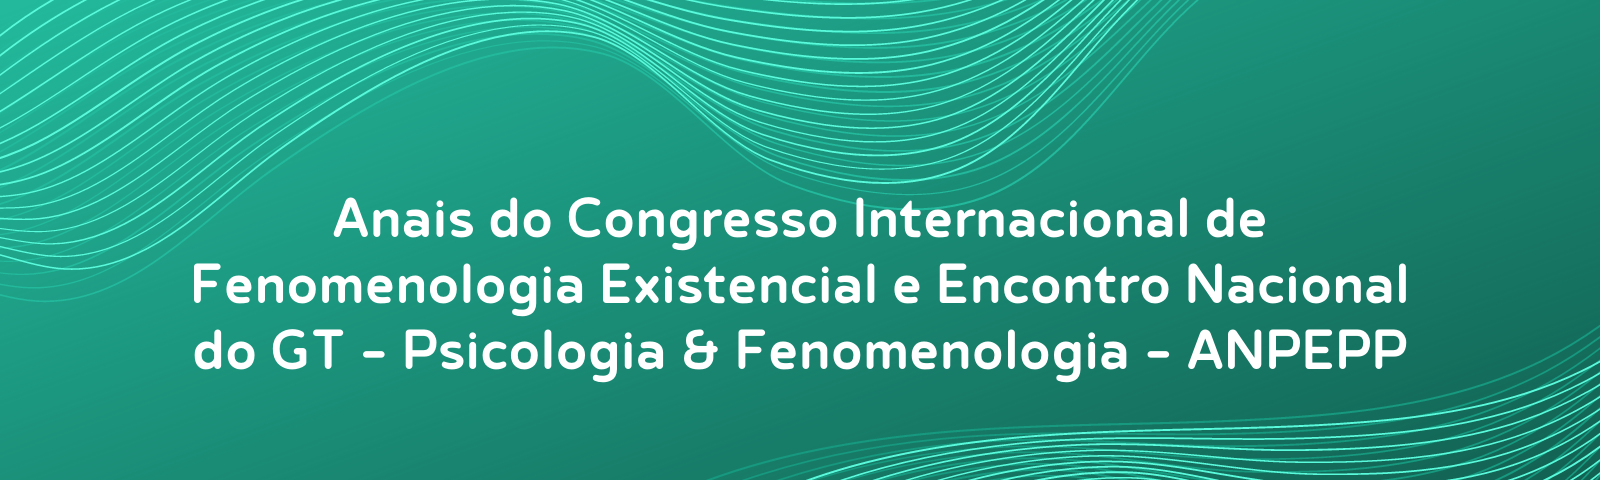 Anais do Congresso Internacional de Fenomenologia Existencial e Encontro Nacional do GT Psicologia & Fenomenologia - ANPEPP